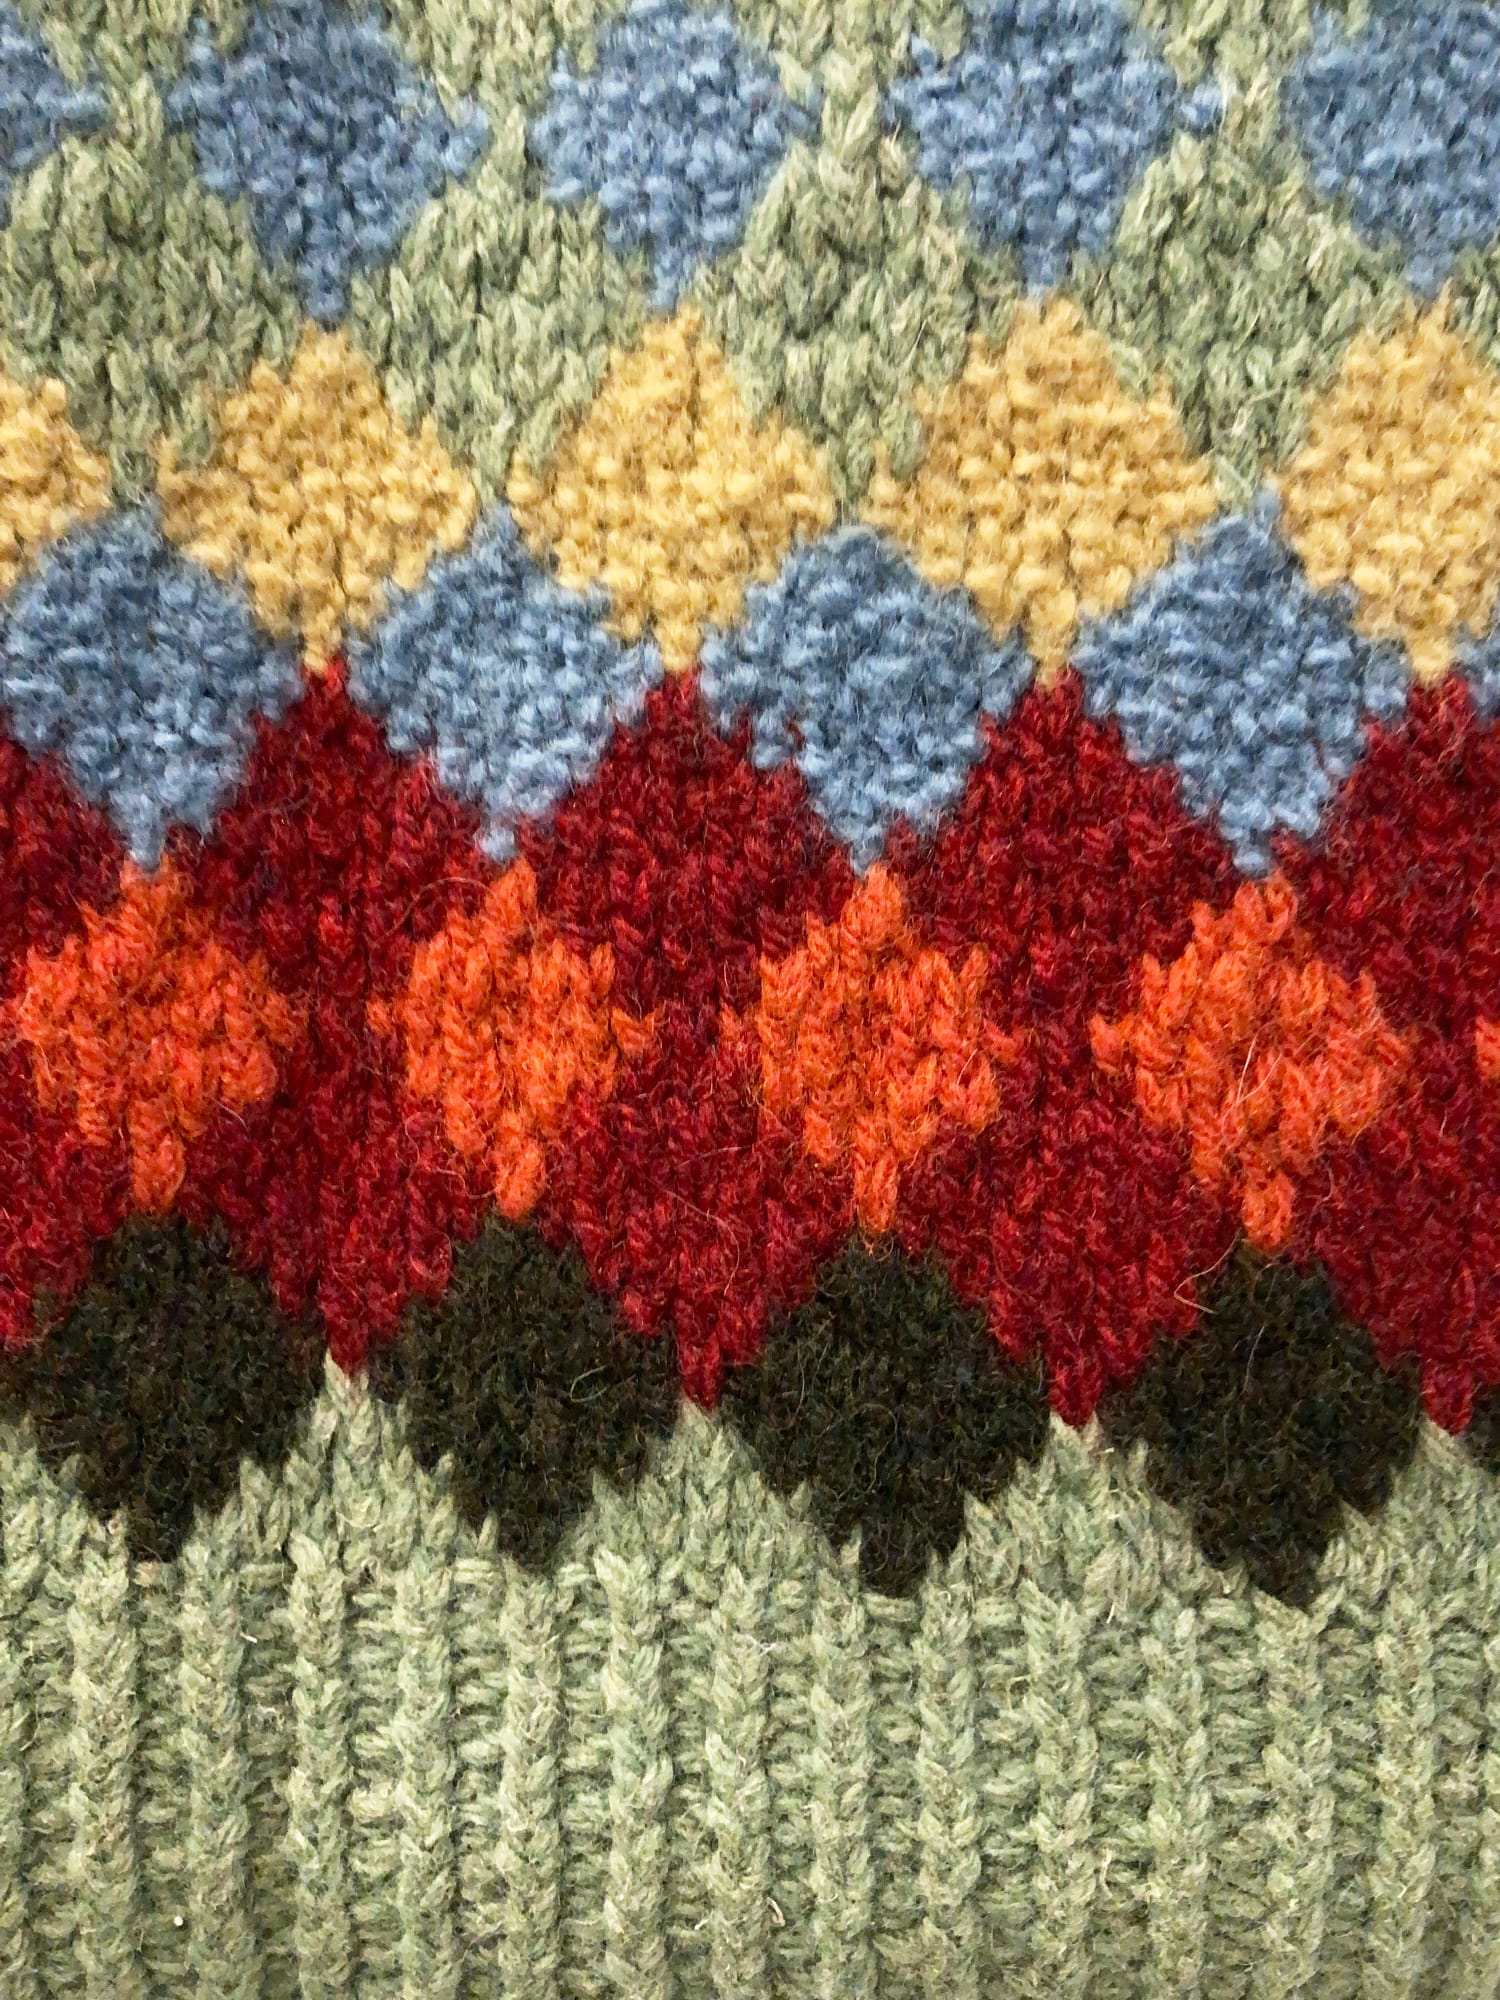 Nicole Farhi 1990s green red multicolour diamond pattern knitted wool vest